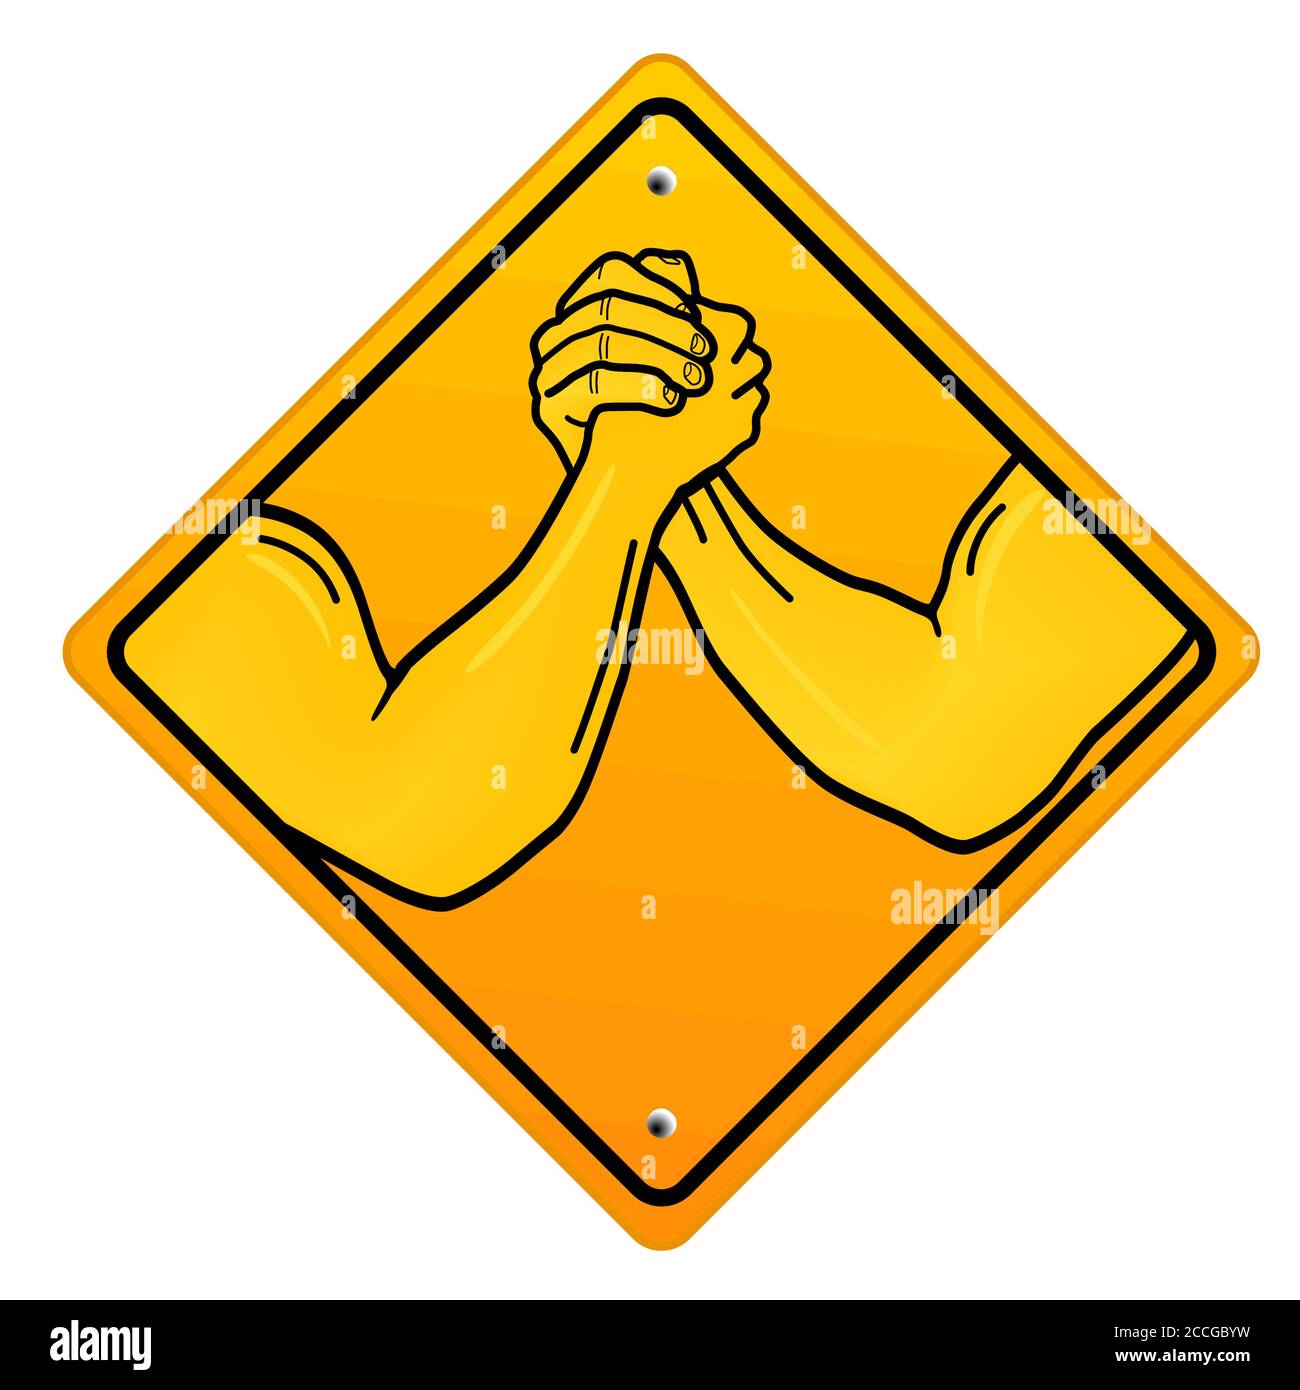 Arm wrestling banner - vector illustration Stock Vector